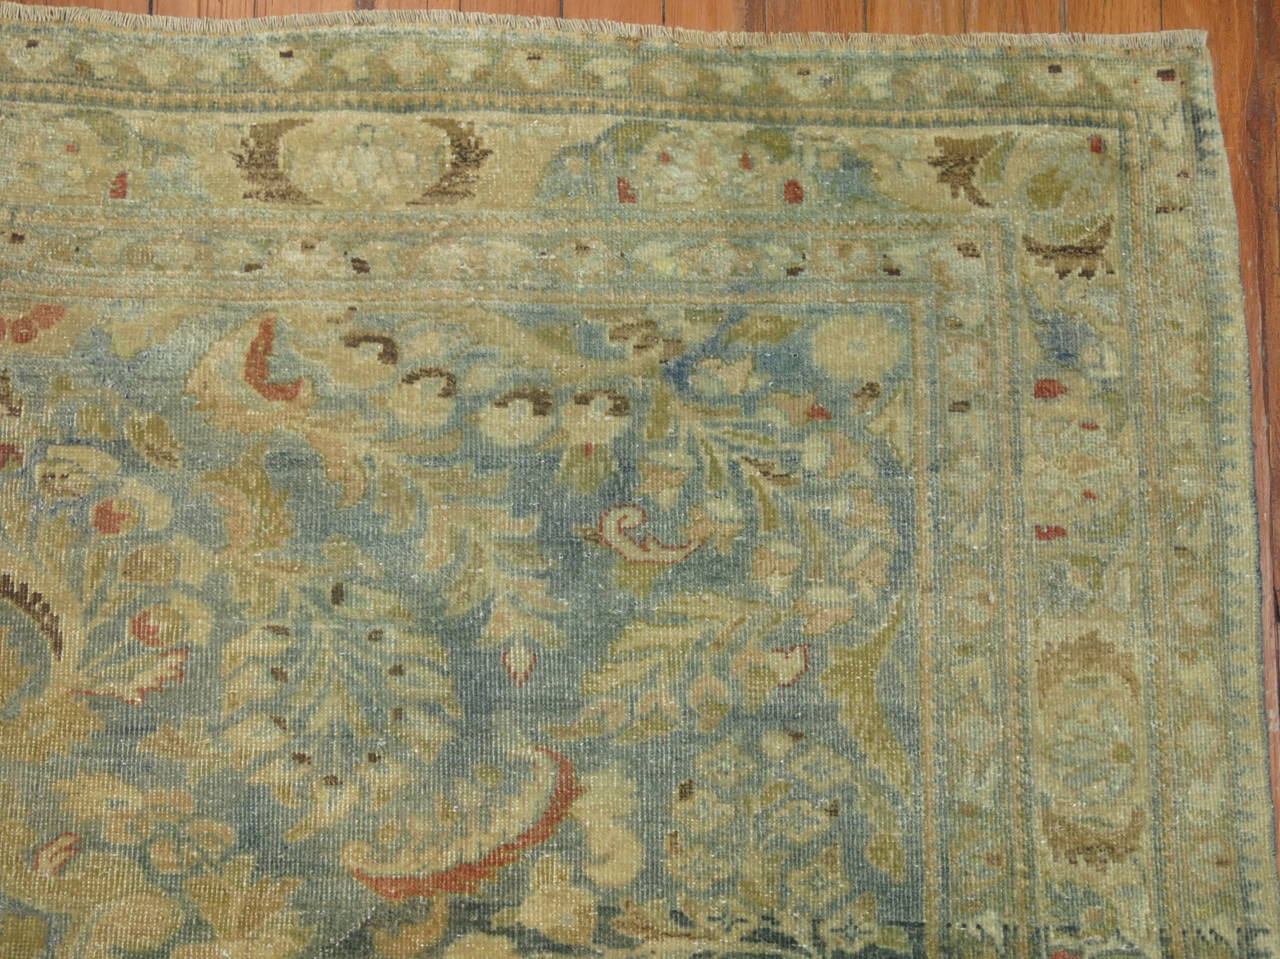 Hand-Woven Antique Aqua Blue Color 4 foot Square Persian Traditonal Formal Sarouk Rug For Sale